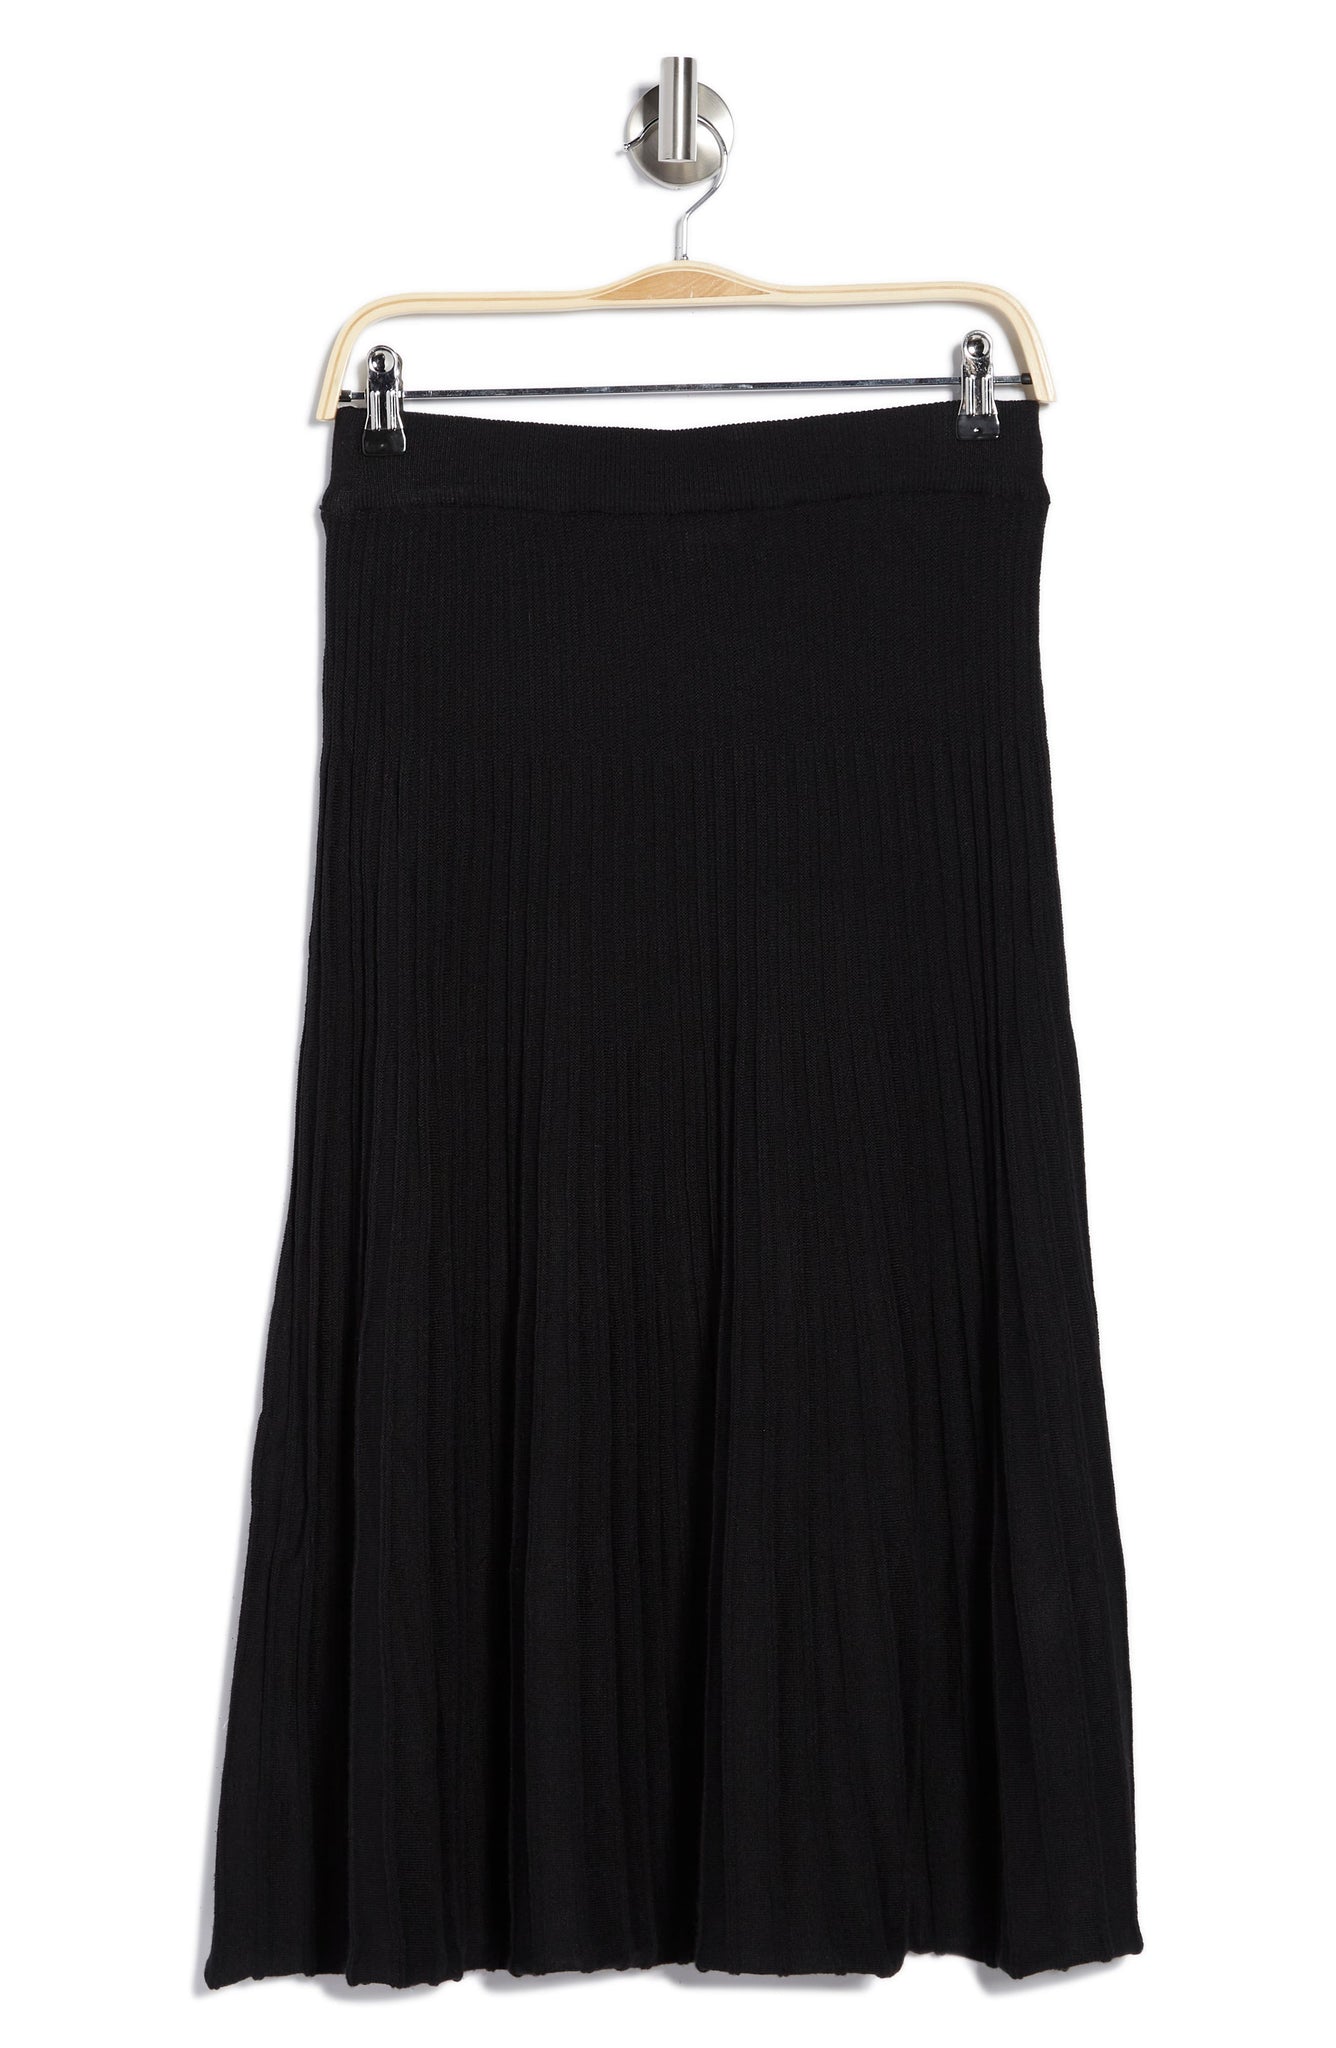 MAXSTUDIO Stripe Sweater Skirt, Main, color, BLACK